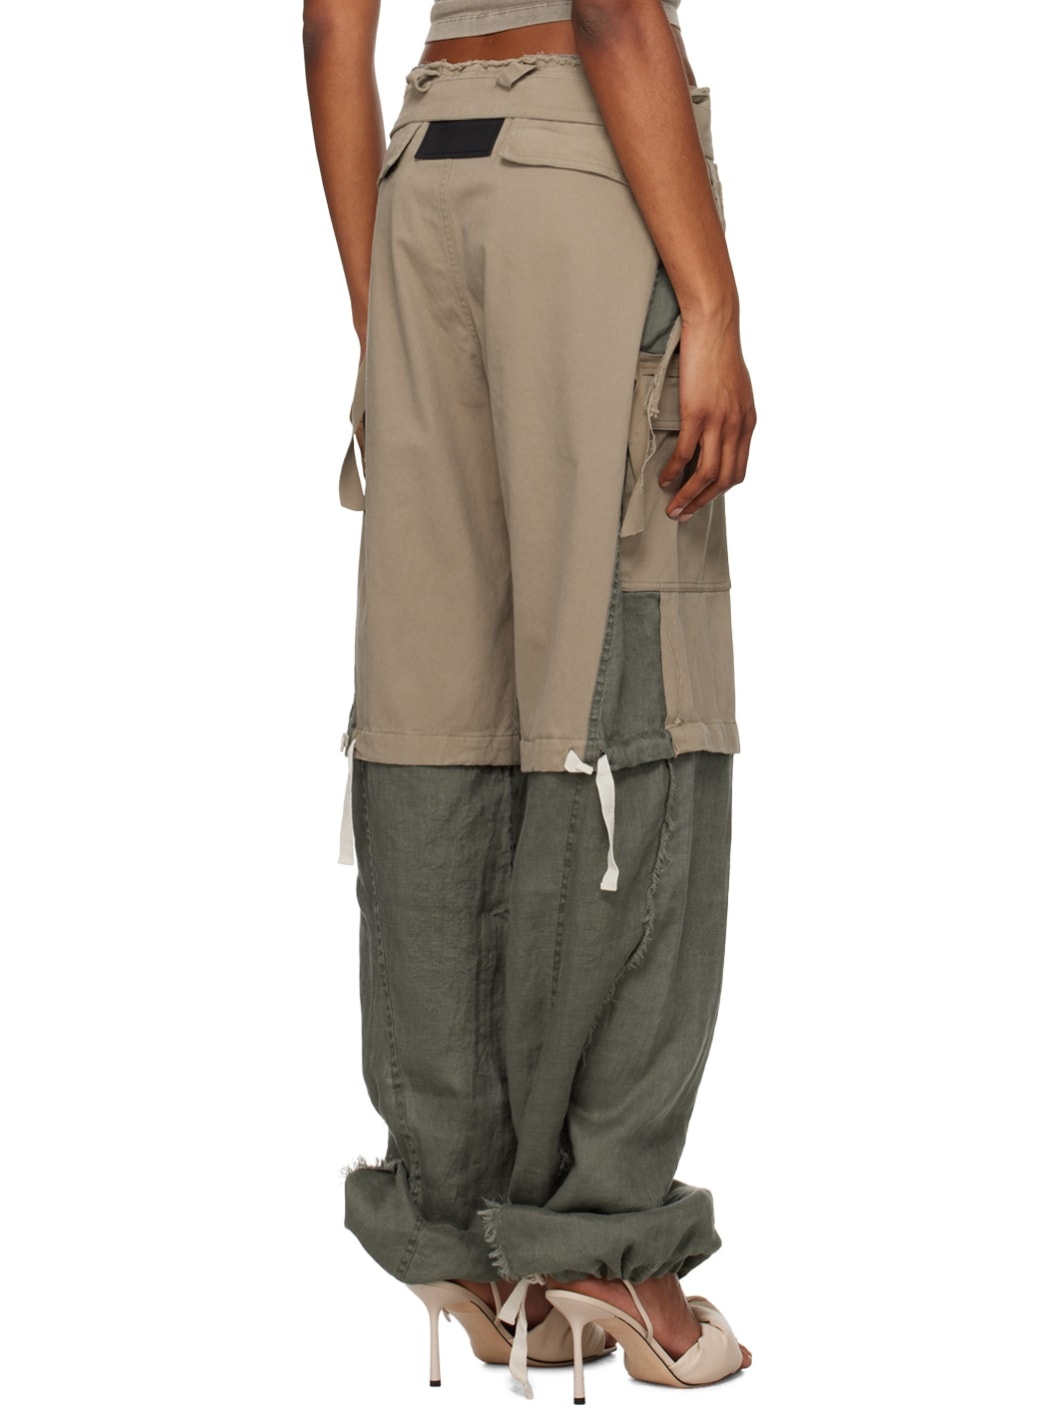 Gray & Khaki Baggy Cargo Pants - 3